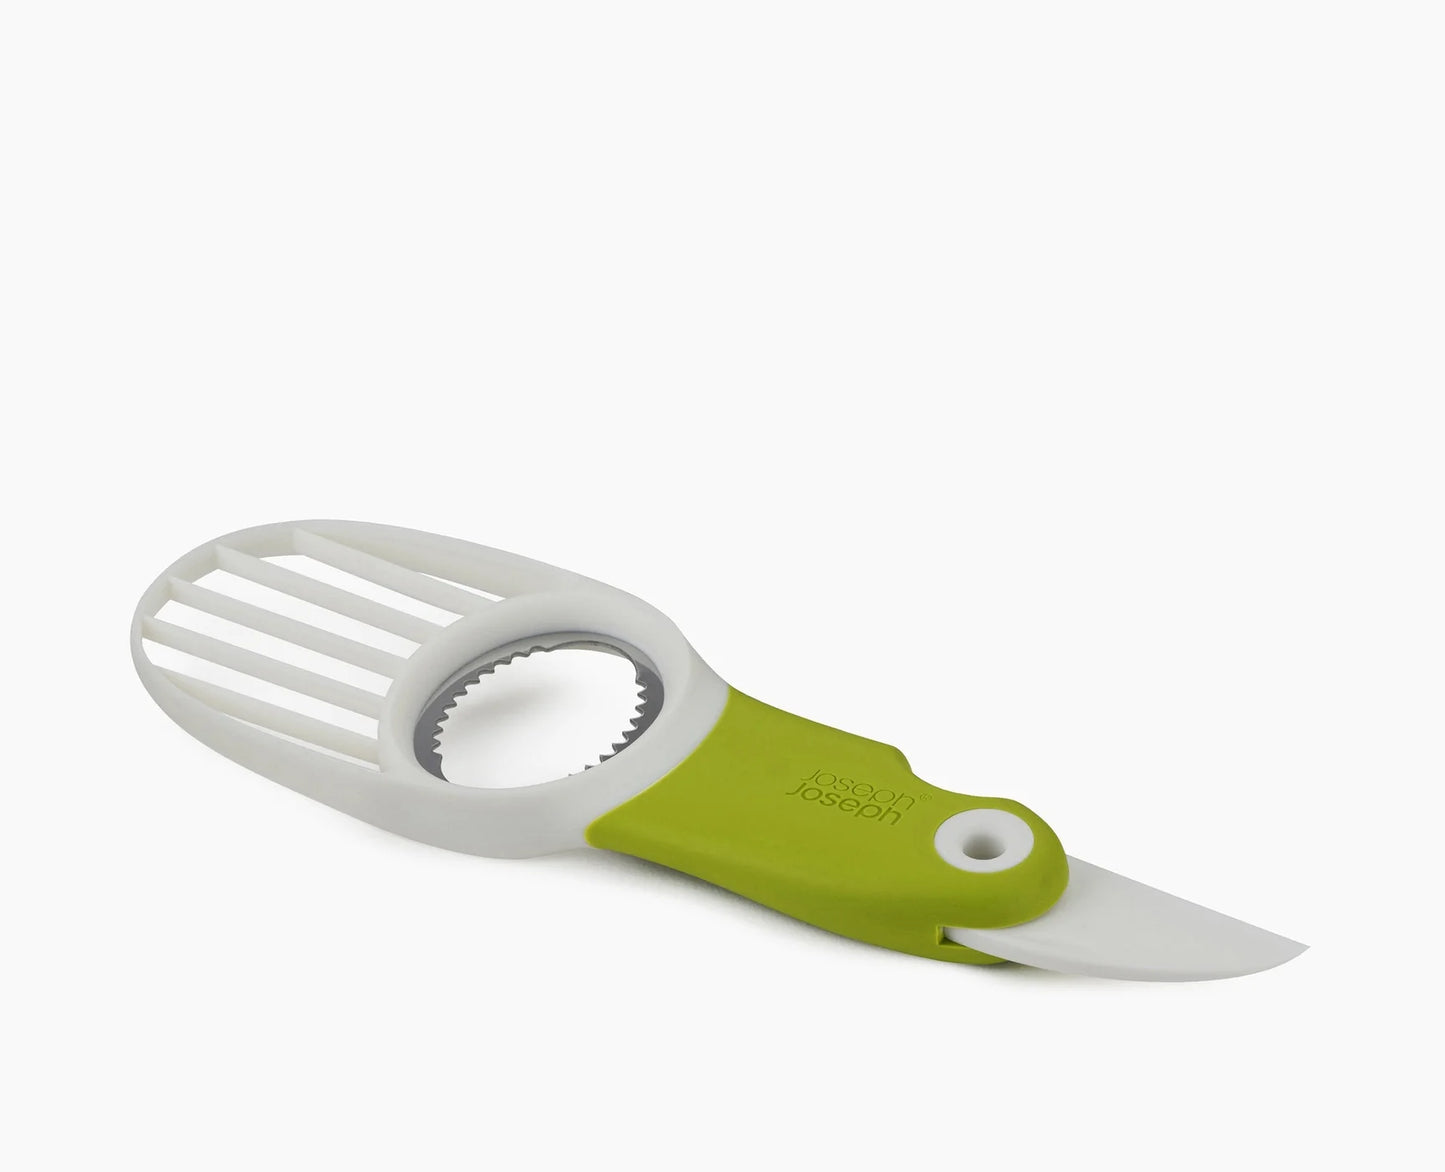 joseph joseph goavocado™ 3-in-1 avocado tool